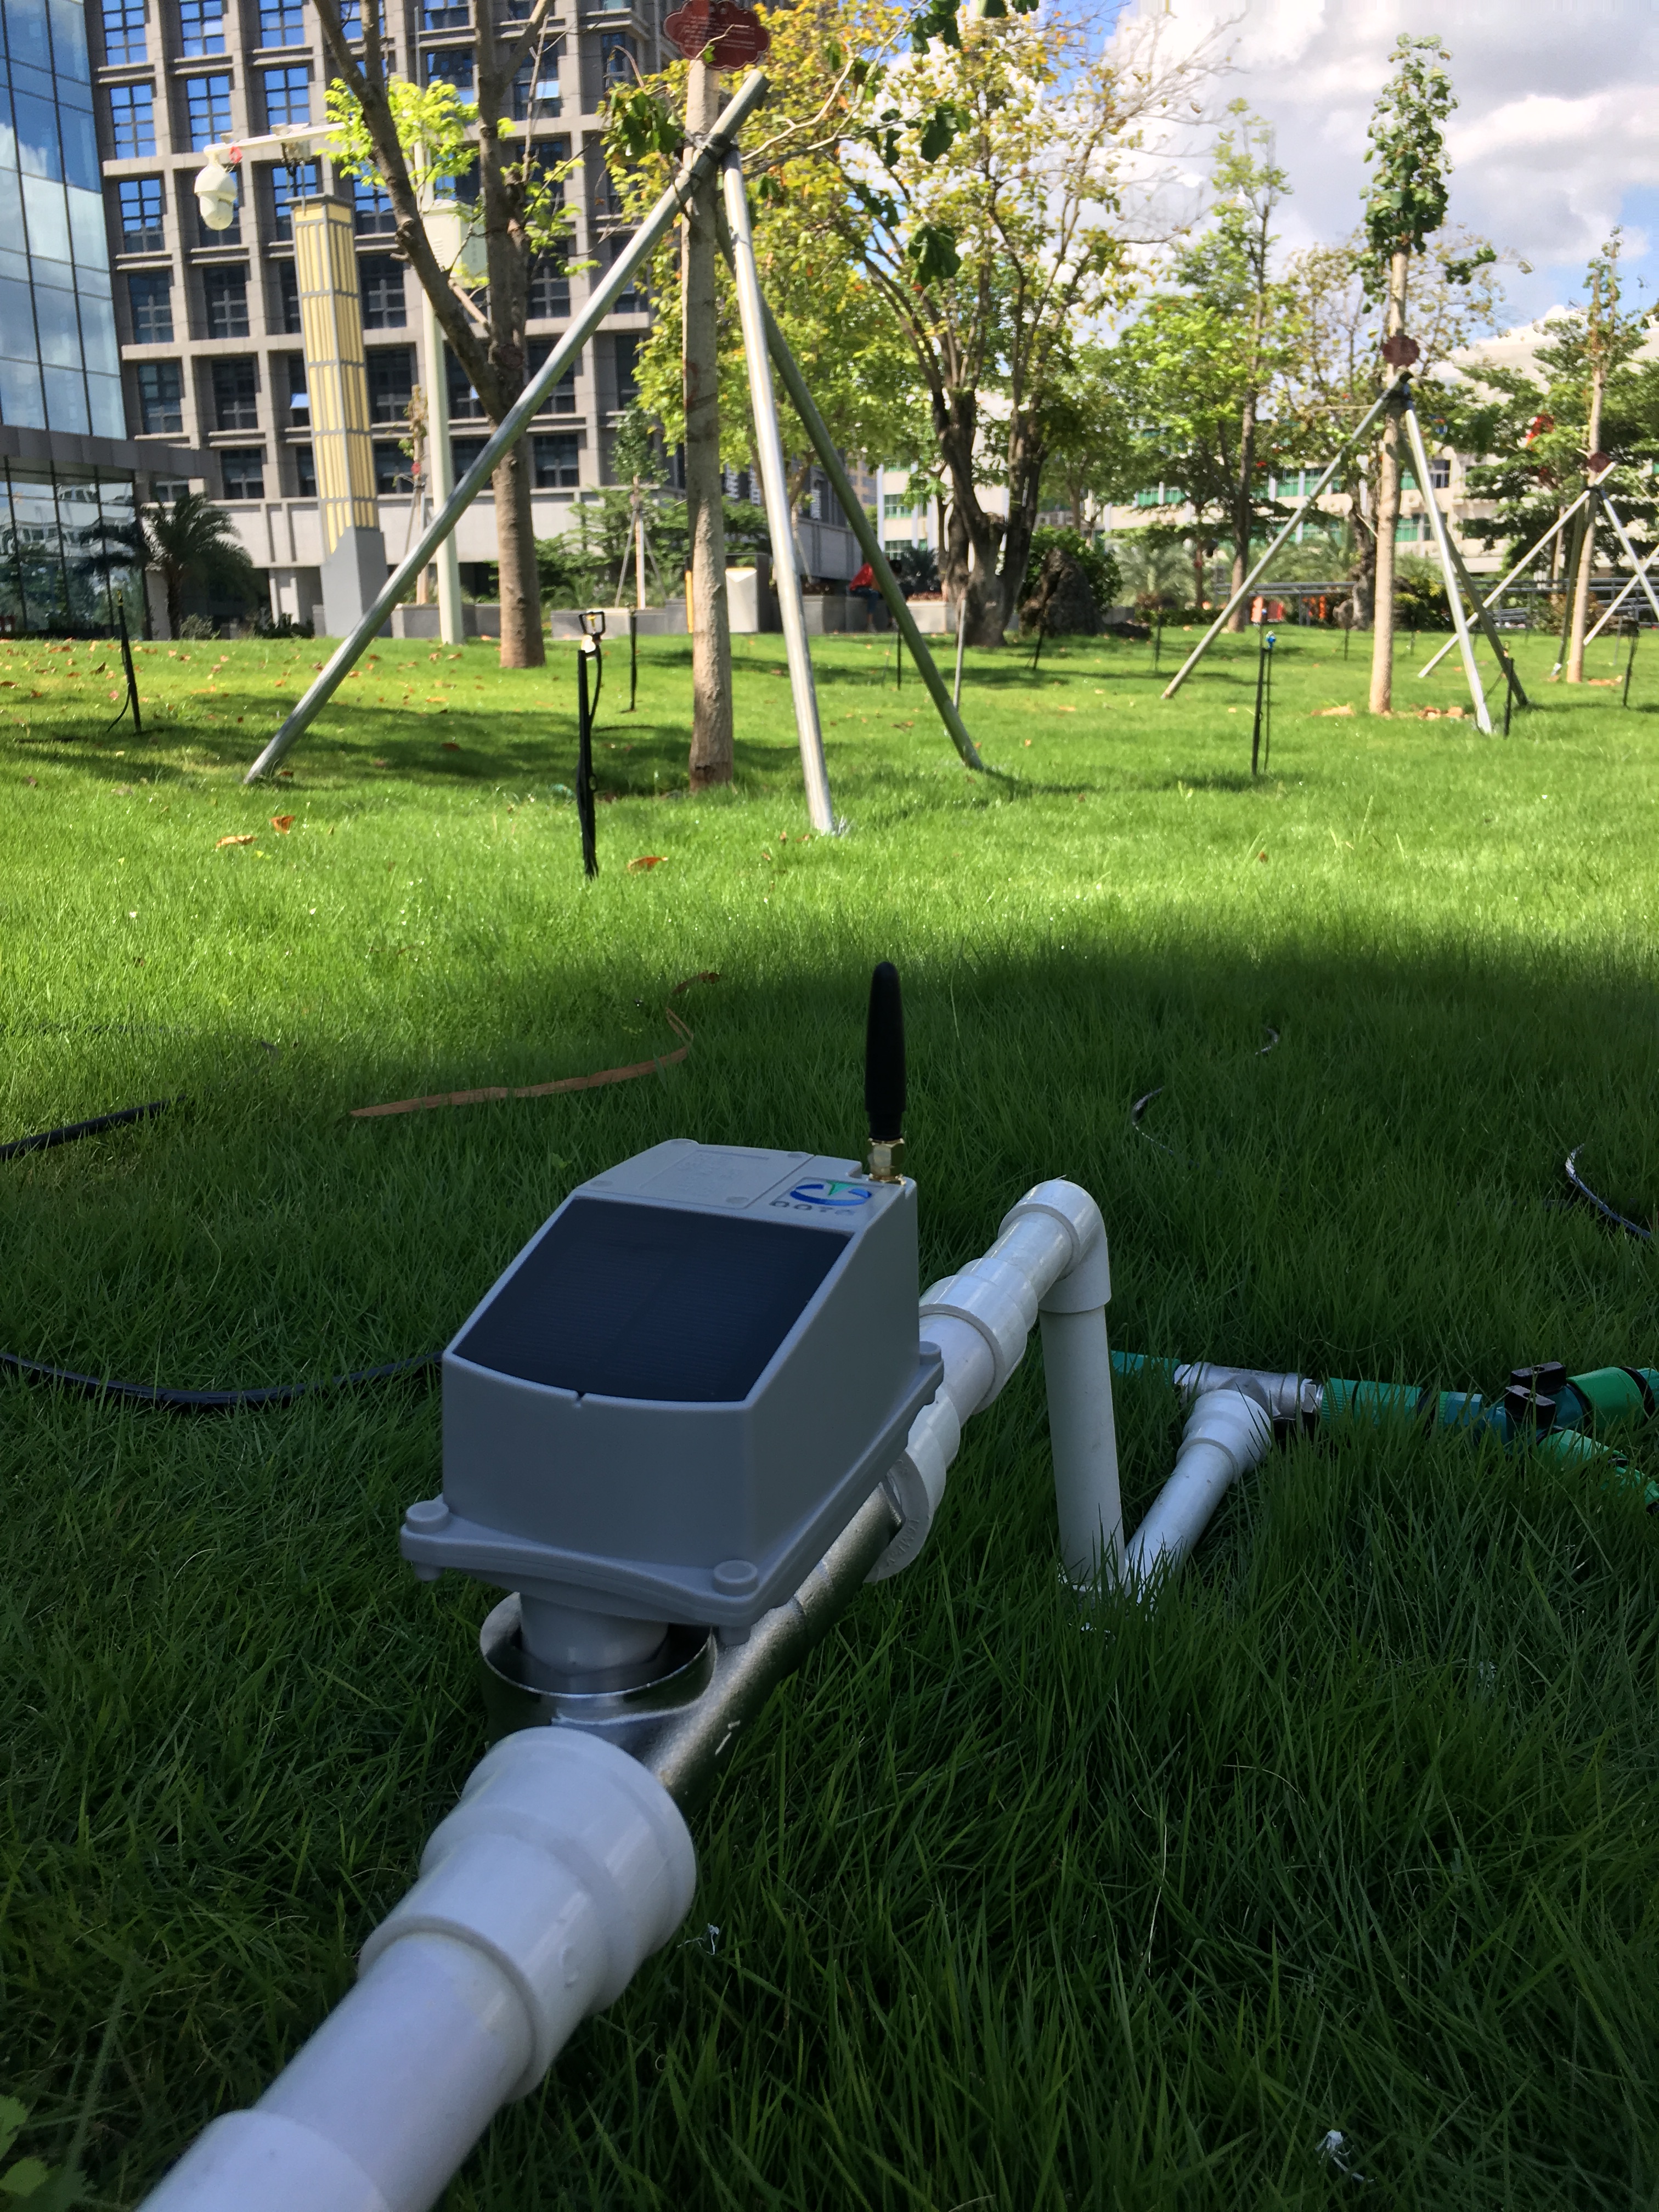 Underground Sprinkler Systems with solar power smart water valve 